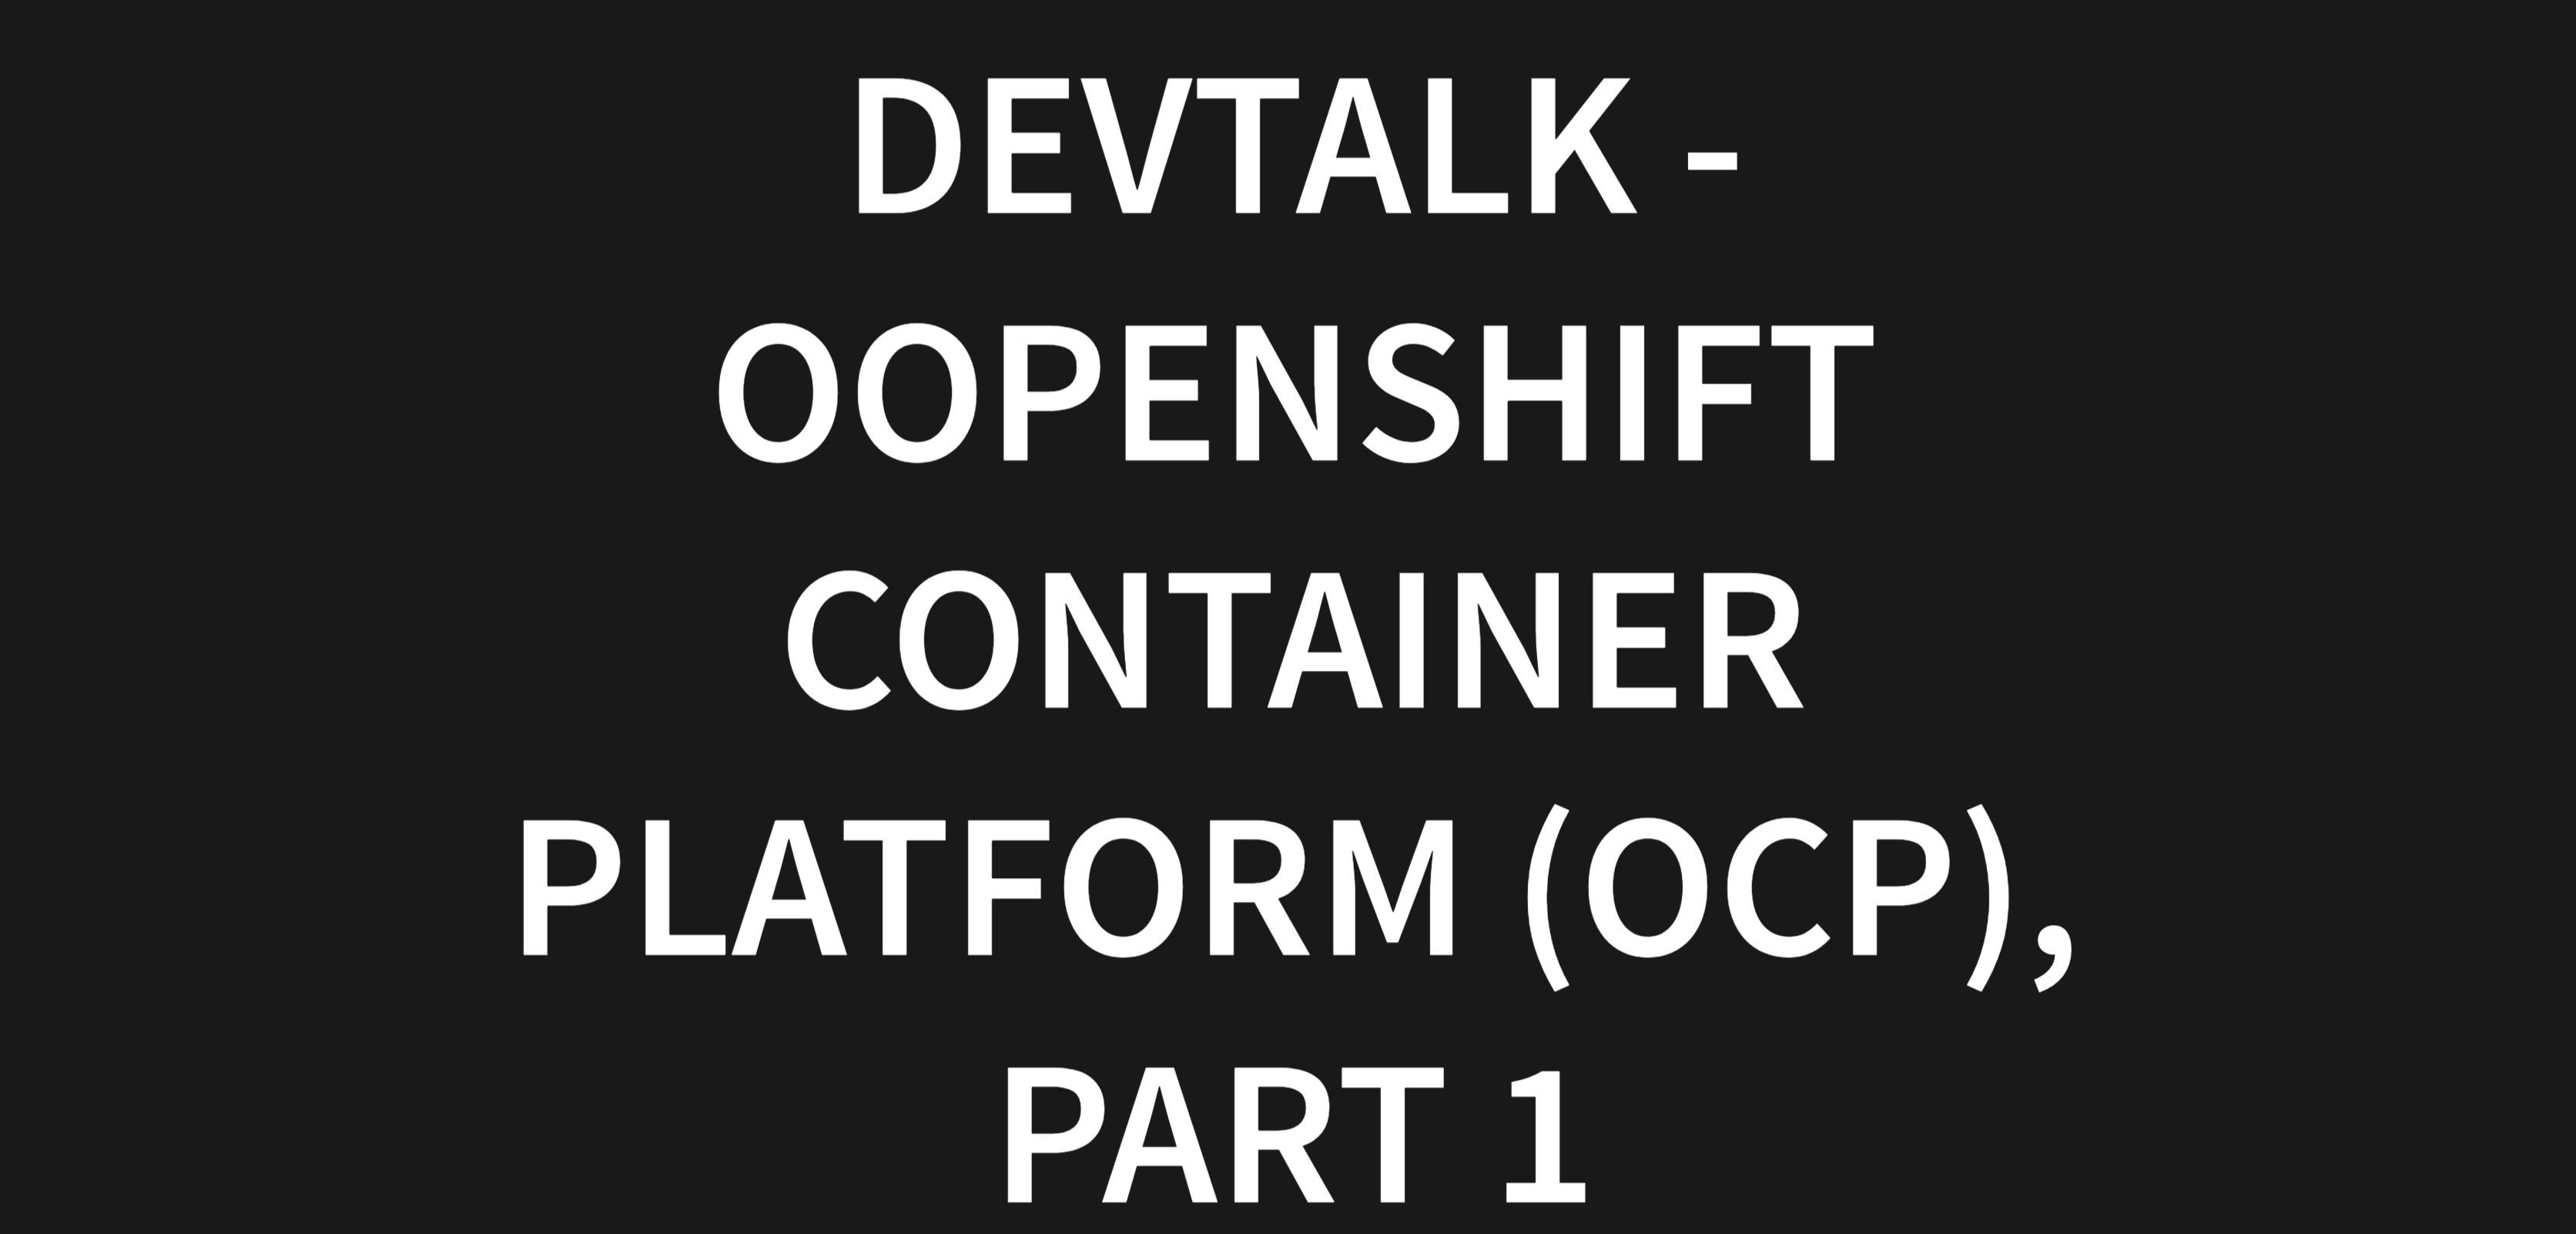 Lightning Talk - Openshift Container Platform